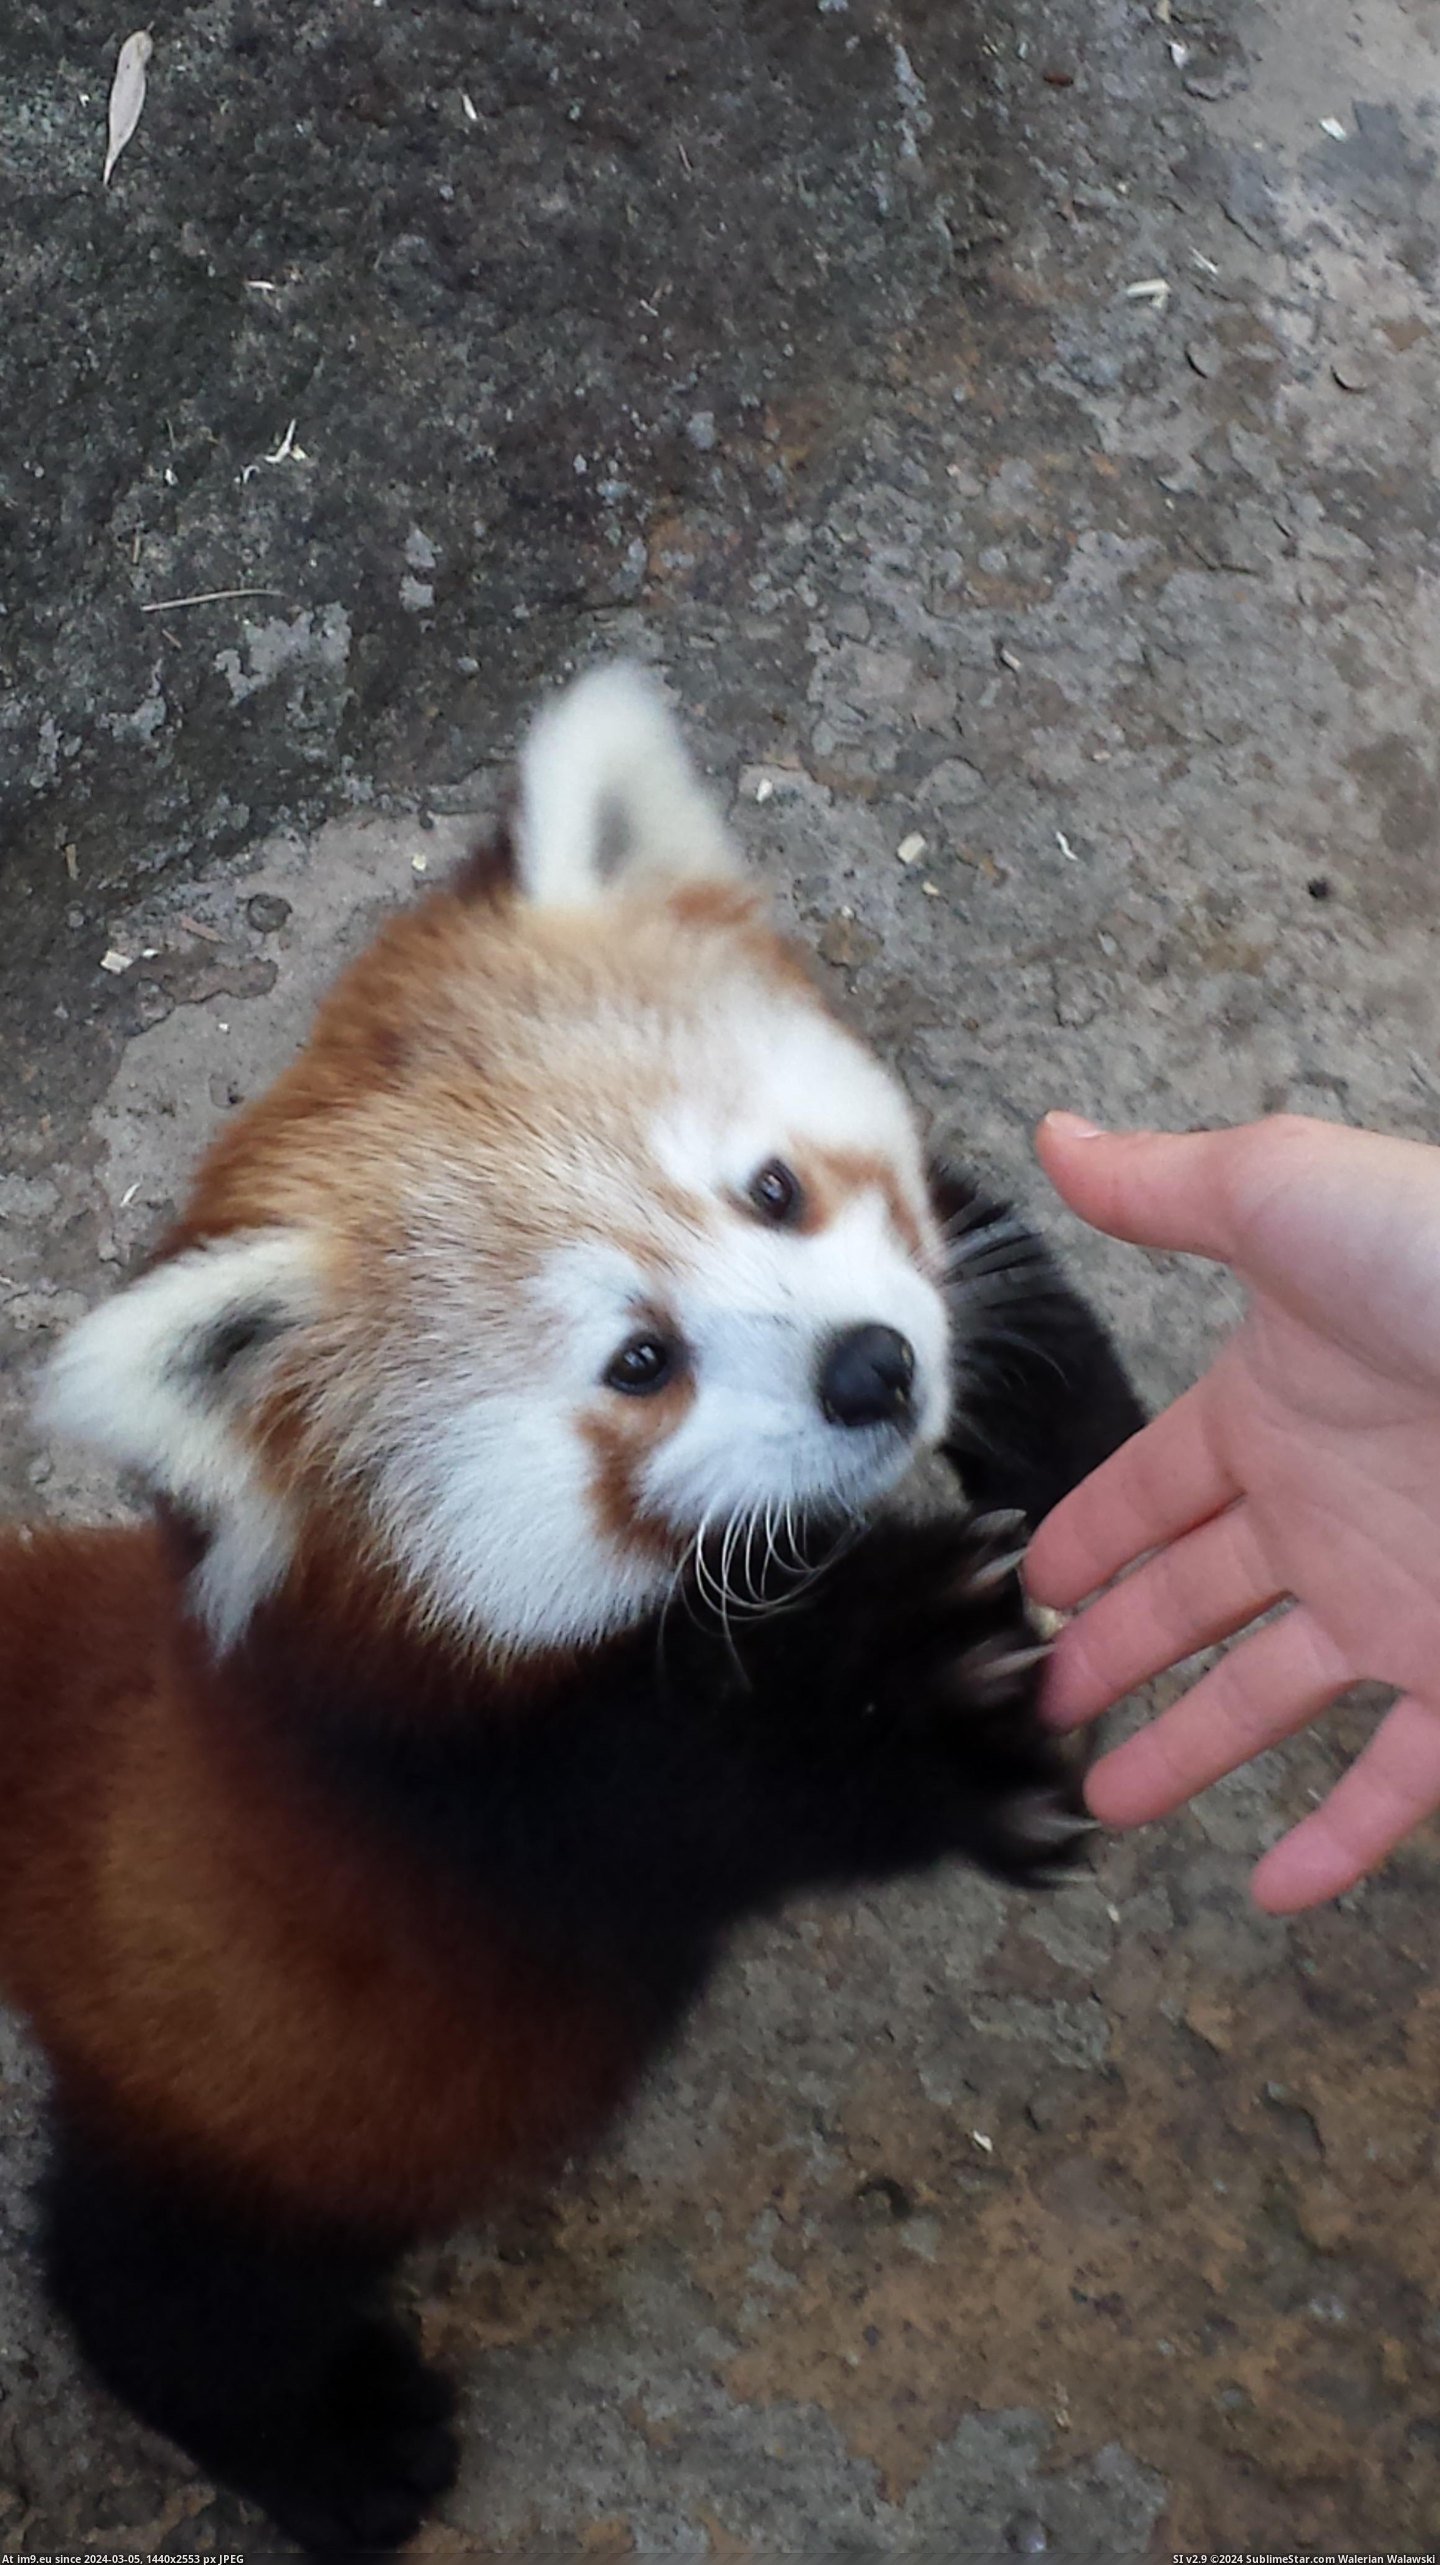 #Red #Girlfriend #Zoo #Panda #Shake #Got #Hands [Aww] My girlfriend got to shake hands with a red panda at the zoo! Pic. (Image of album My r/AWW favs))